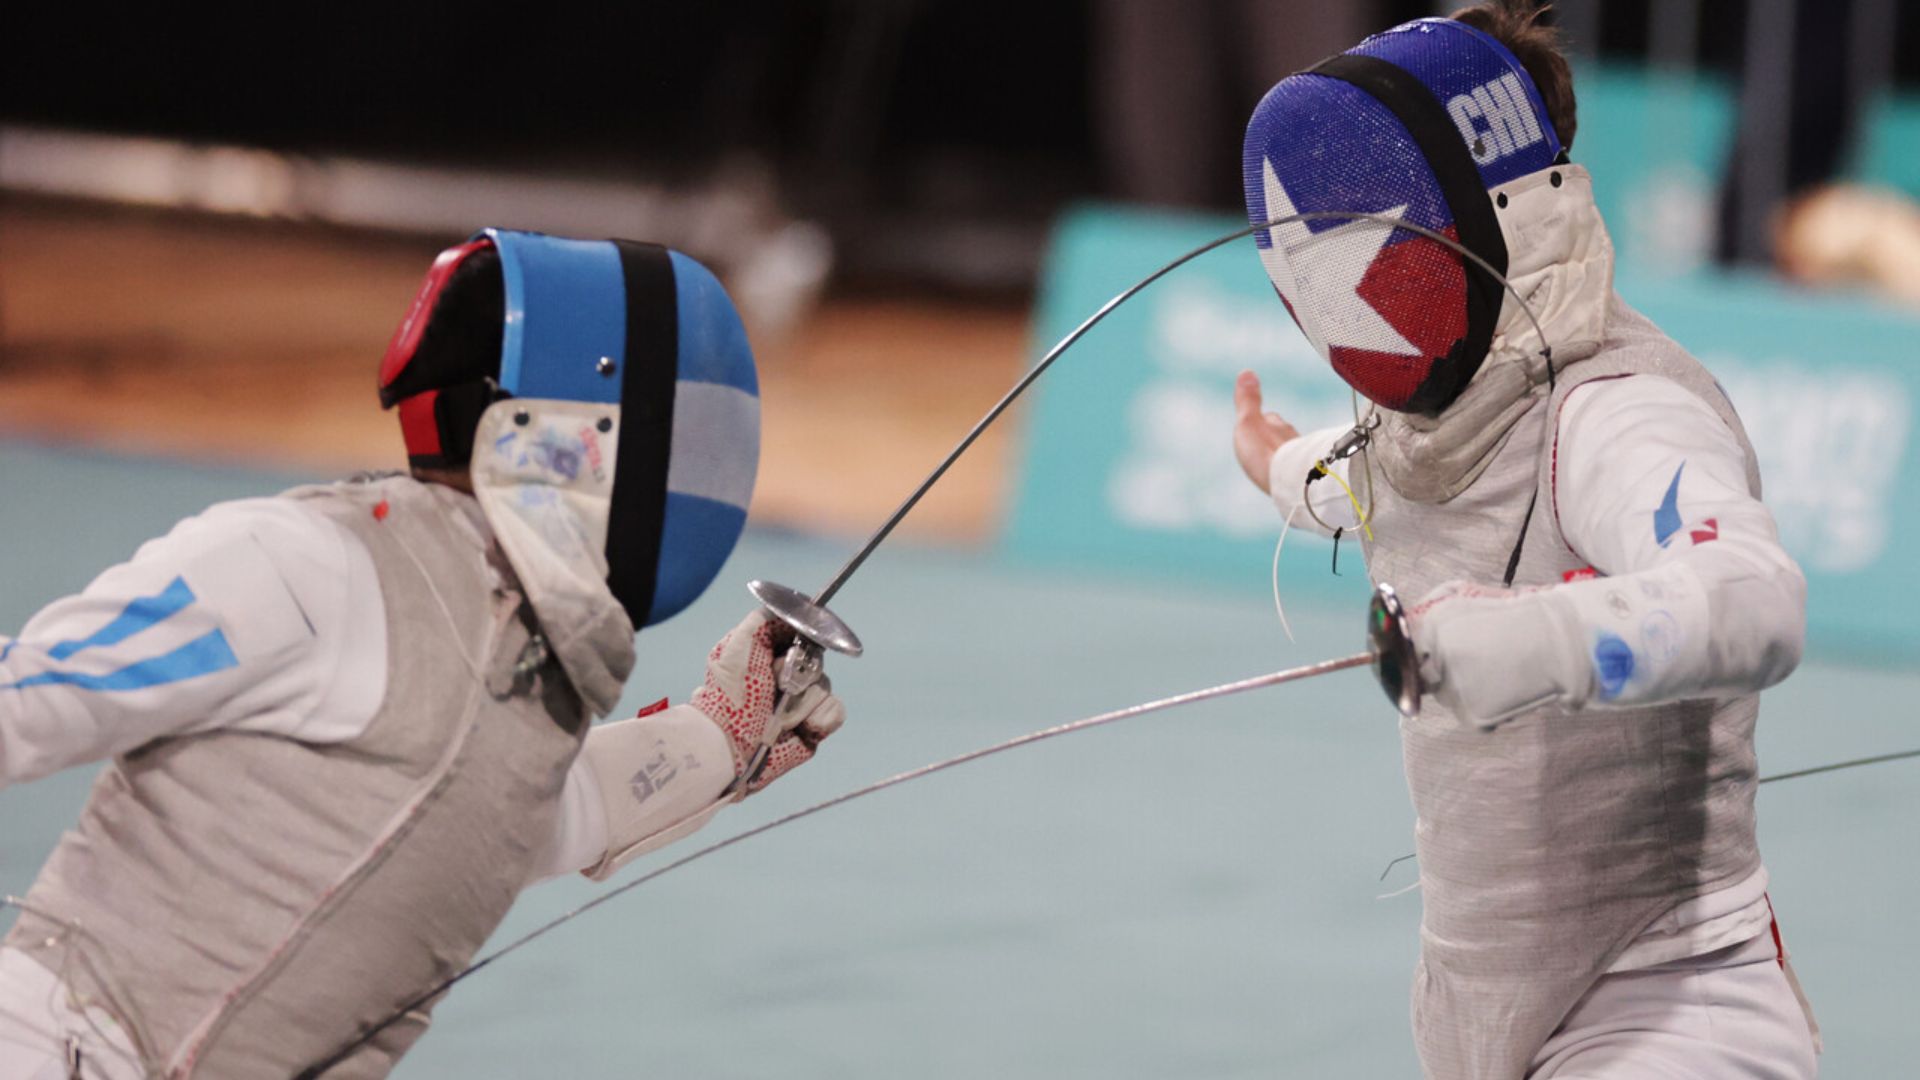 Fencing: Chile Advances to Male's Team Foil Semifinals